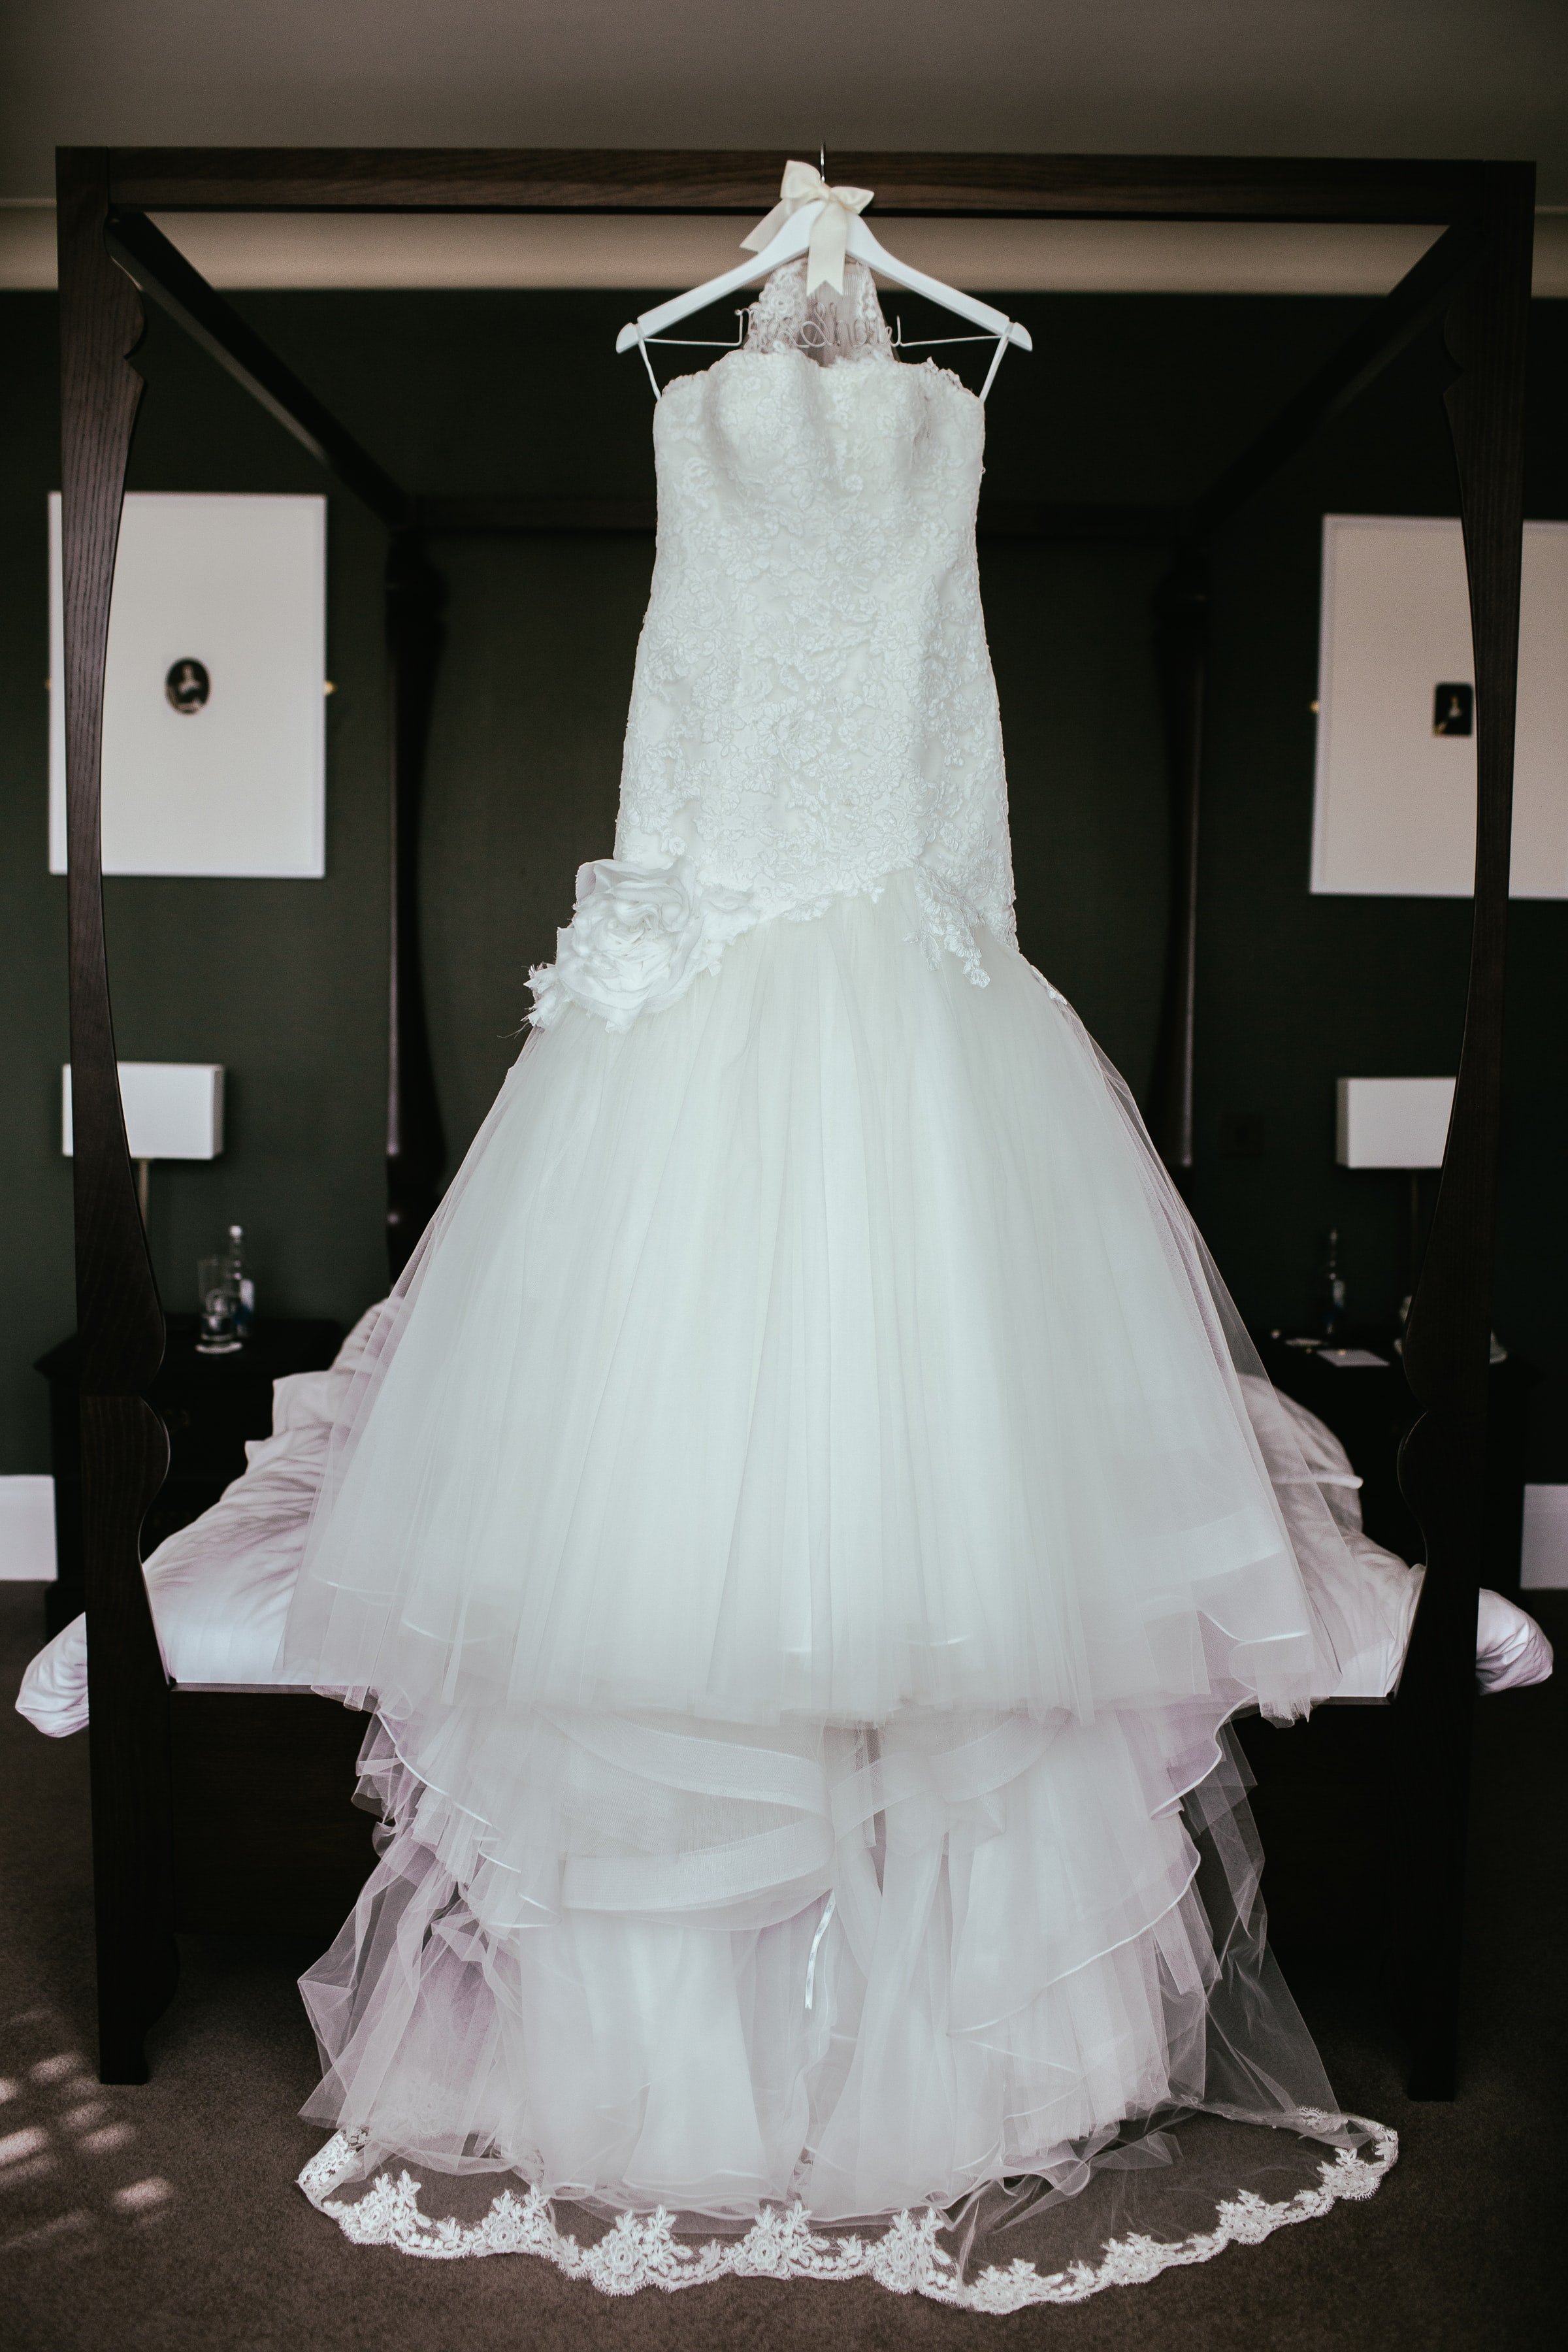 A white wedding dress. | Source: Unsplash